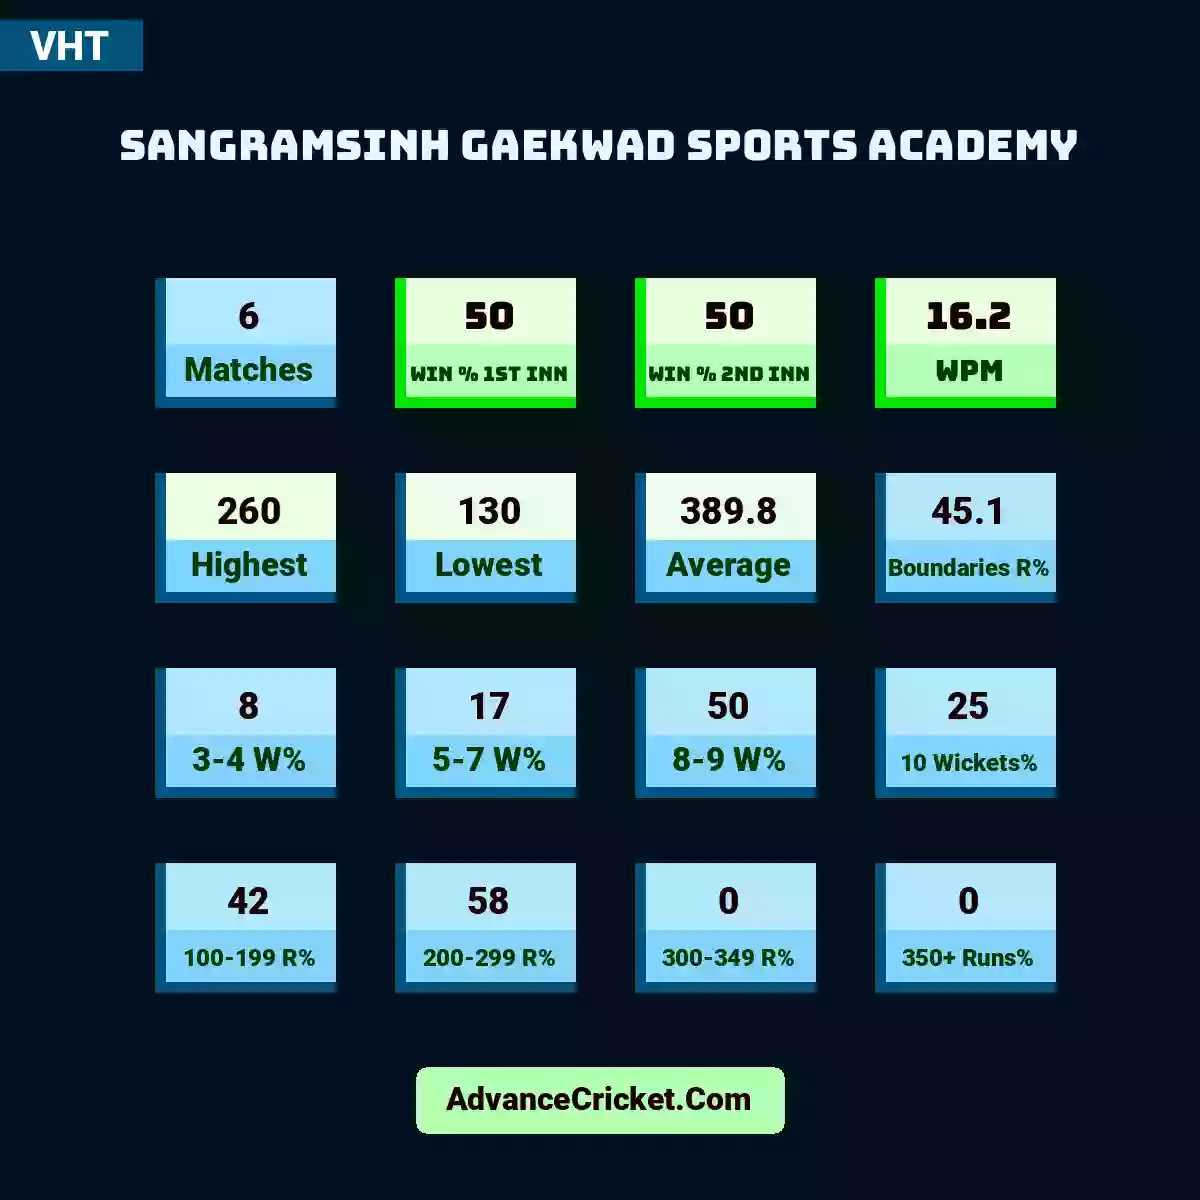 Image showing Sangramsinh Gaekwad Sports Academy with Matches: 6, Win % 1st Inn: 50, Win % 2nd Inn: 50, WPM: 16.2, Highest: 260, Lowest: 130, Average: 389.8, Boundaries R%: 45.1, 3-4 W%: 8, 5-7 W%: 17, 8-9 W%: 50, 10 Wickets%: 25, 100-199 R%: 42, 200-299 R%: 58, 300-349 R%: 0, 350+ Runs%: 0.